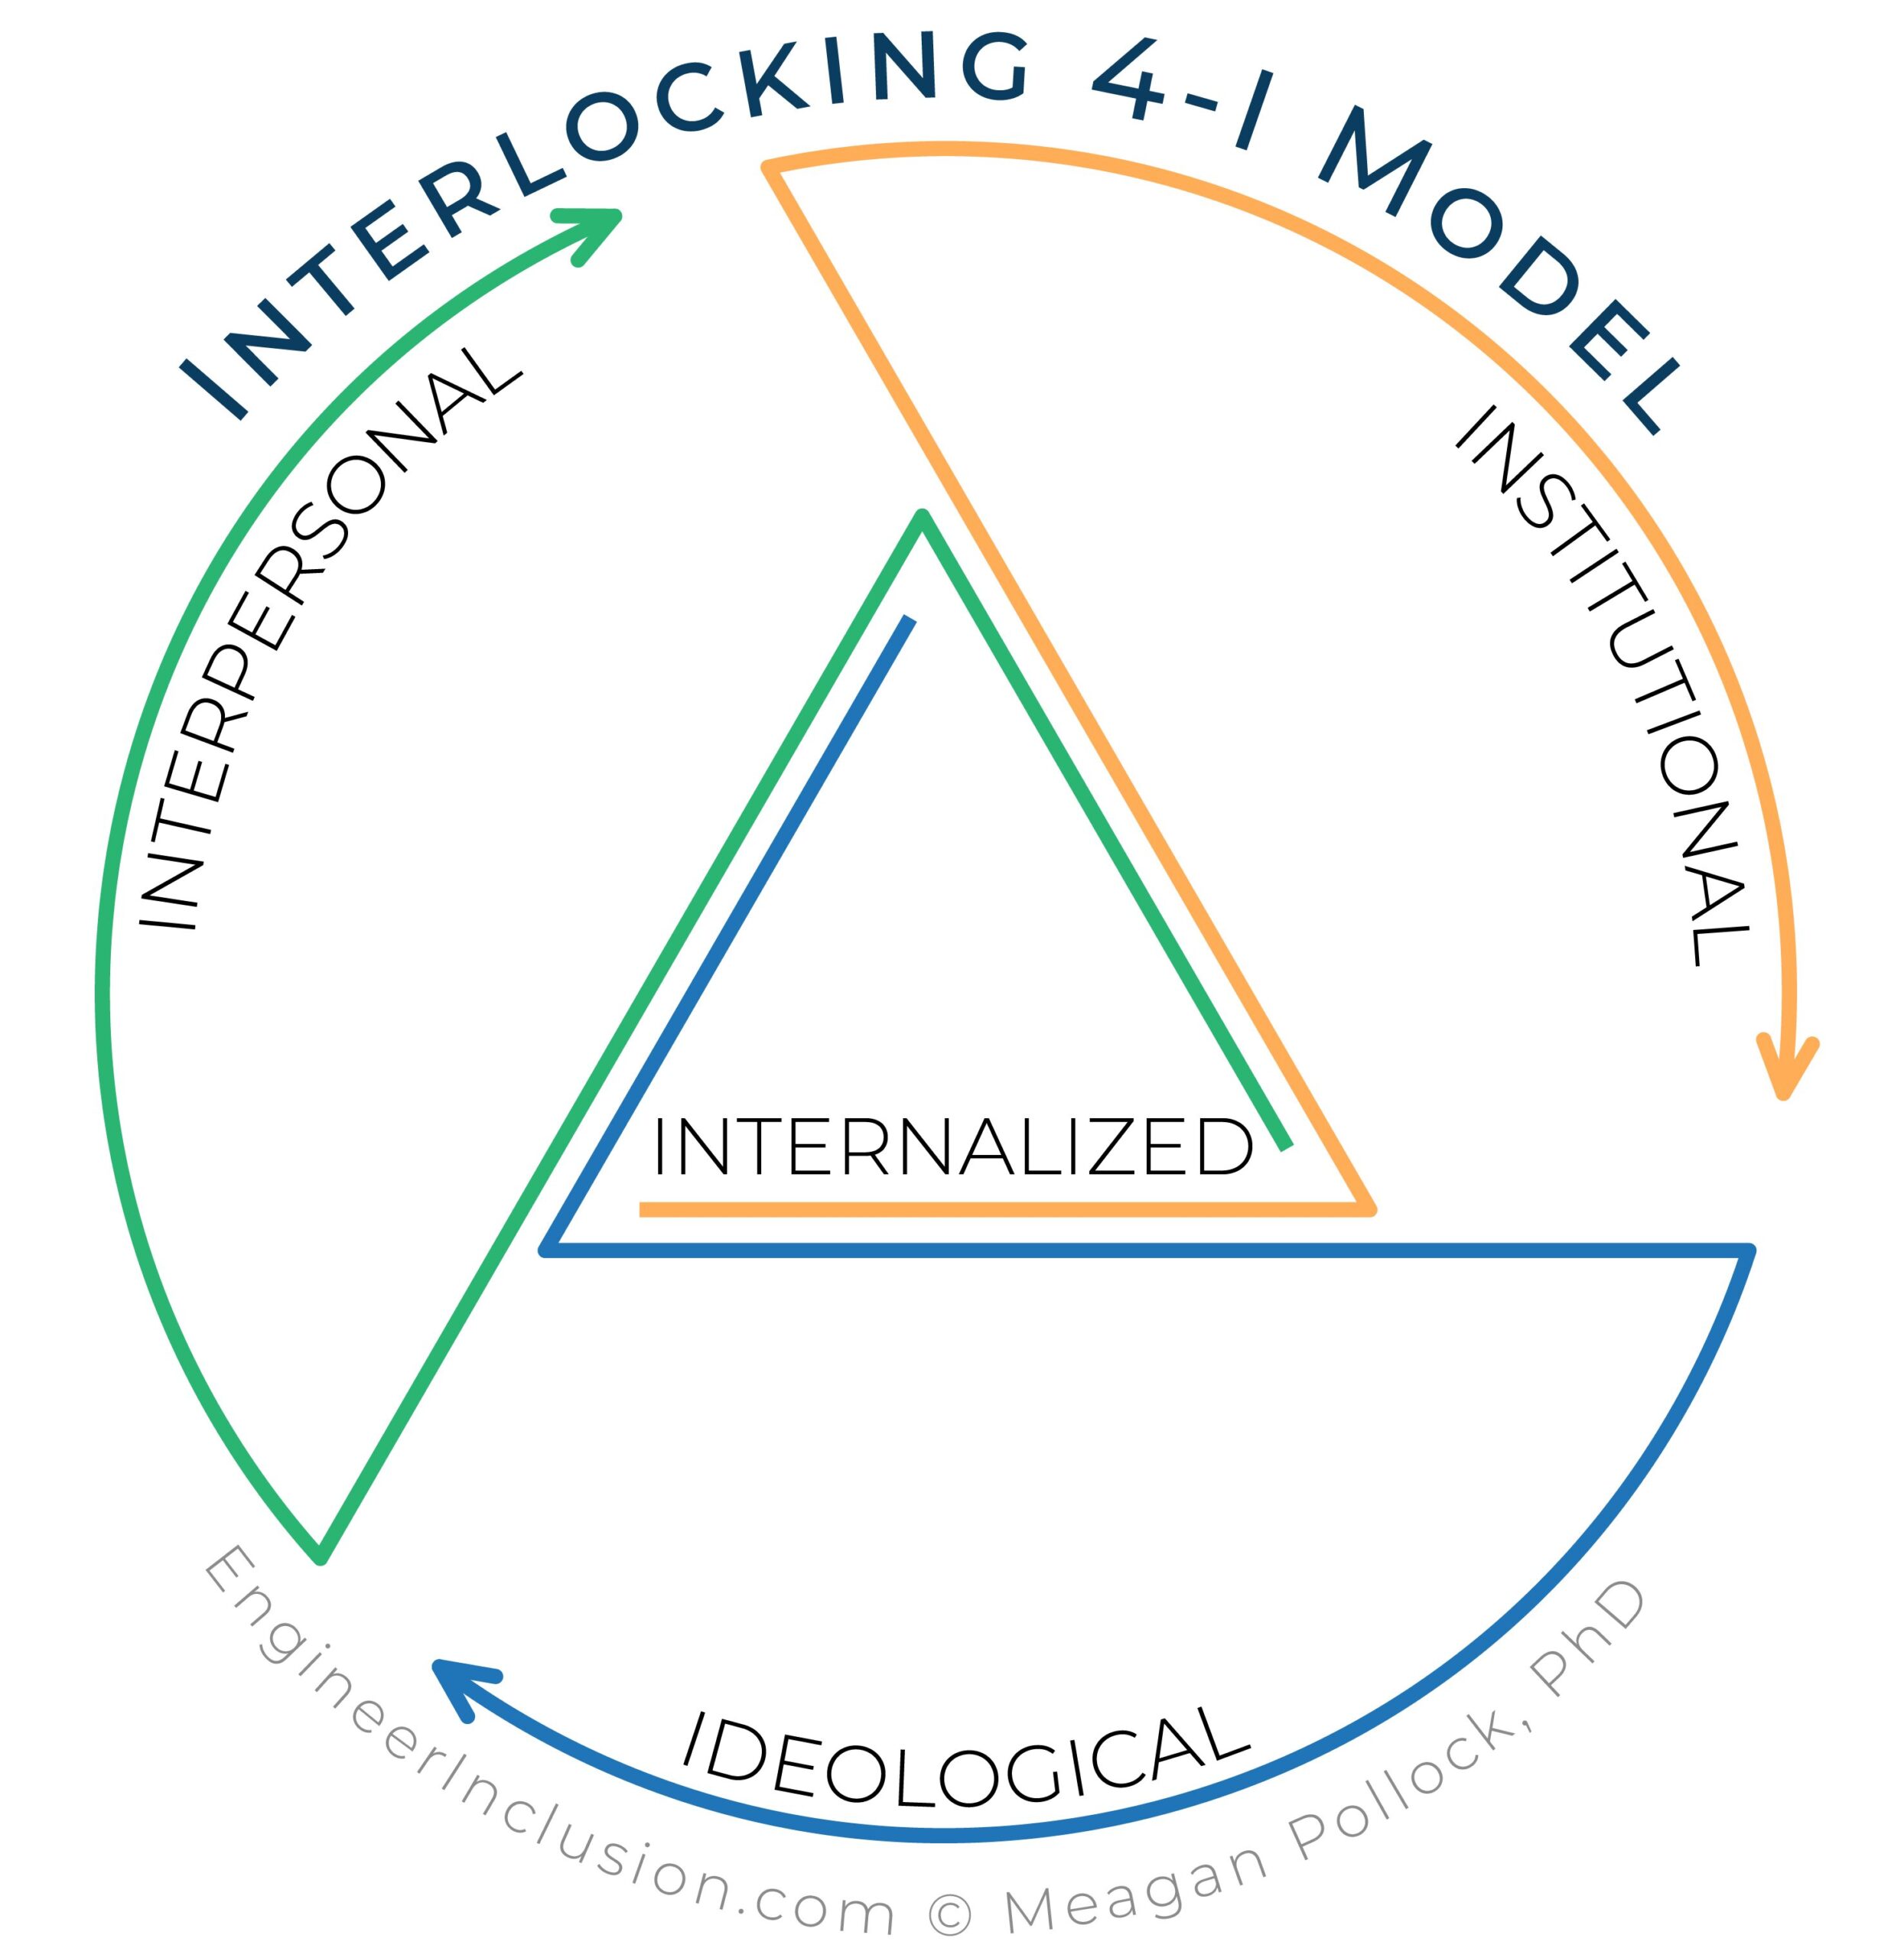 Interlocking 4I model: 4-i's of oppression with title